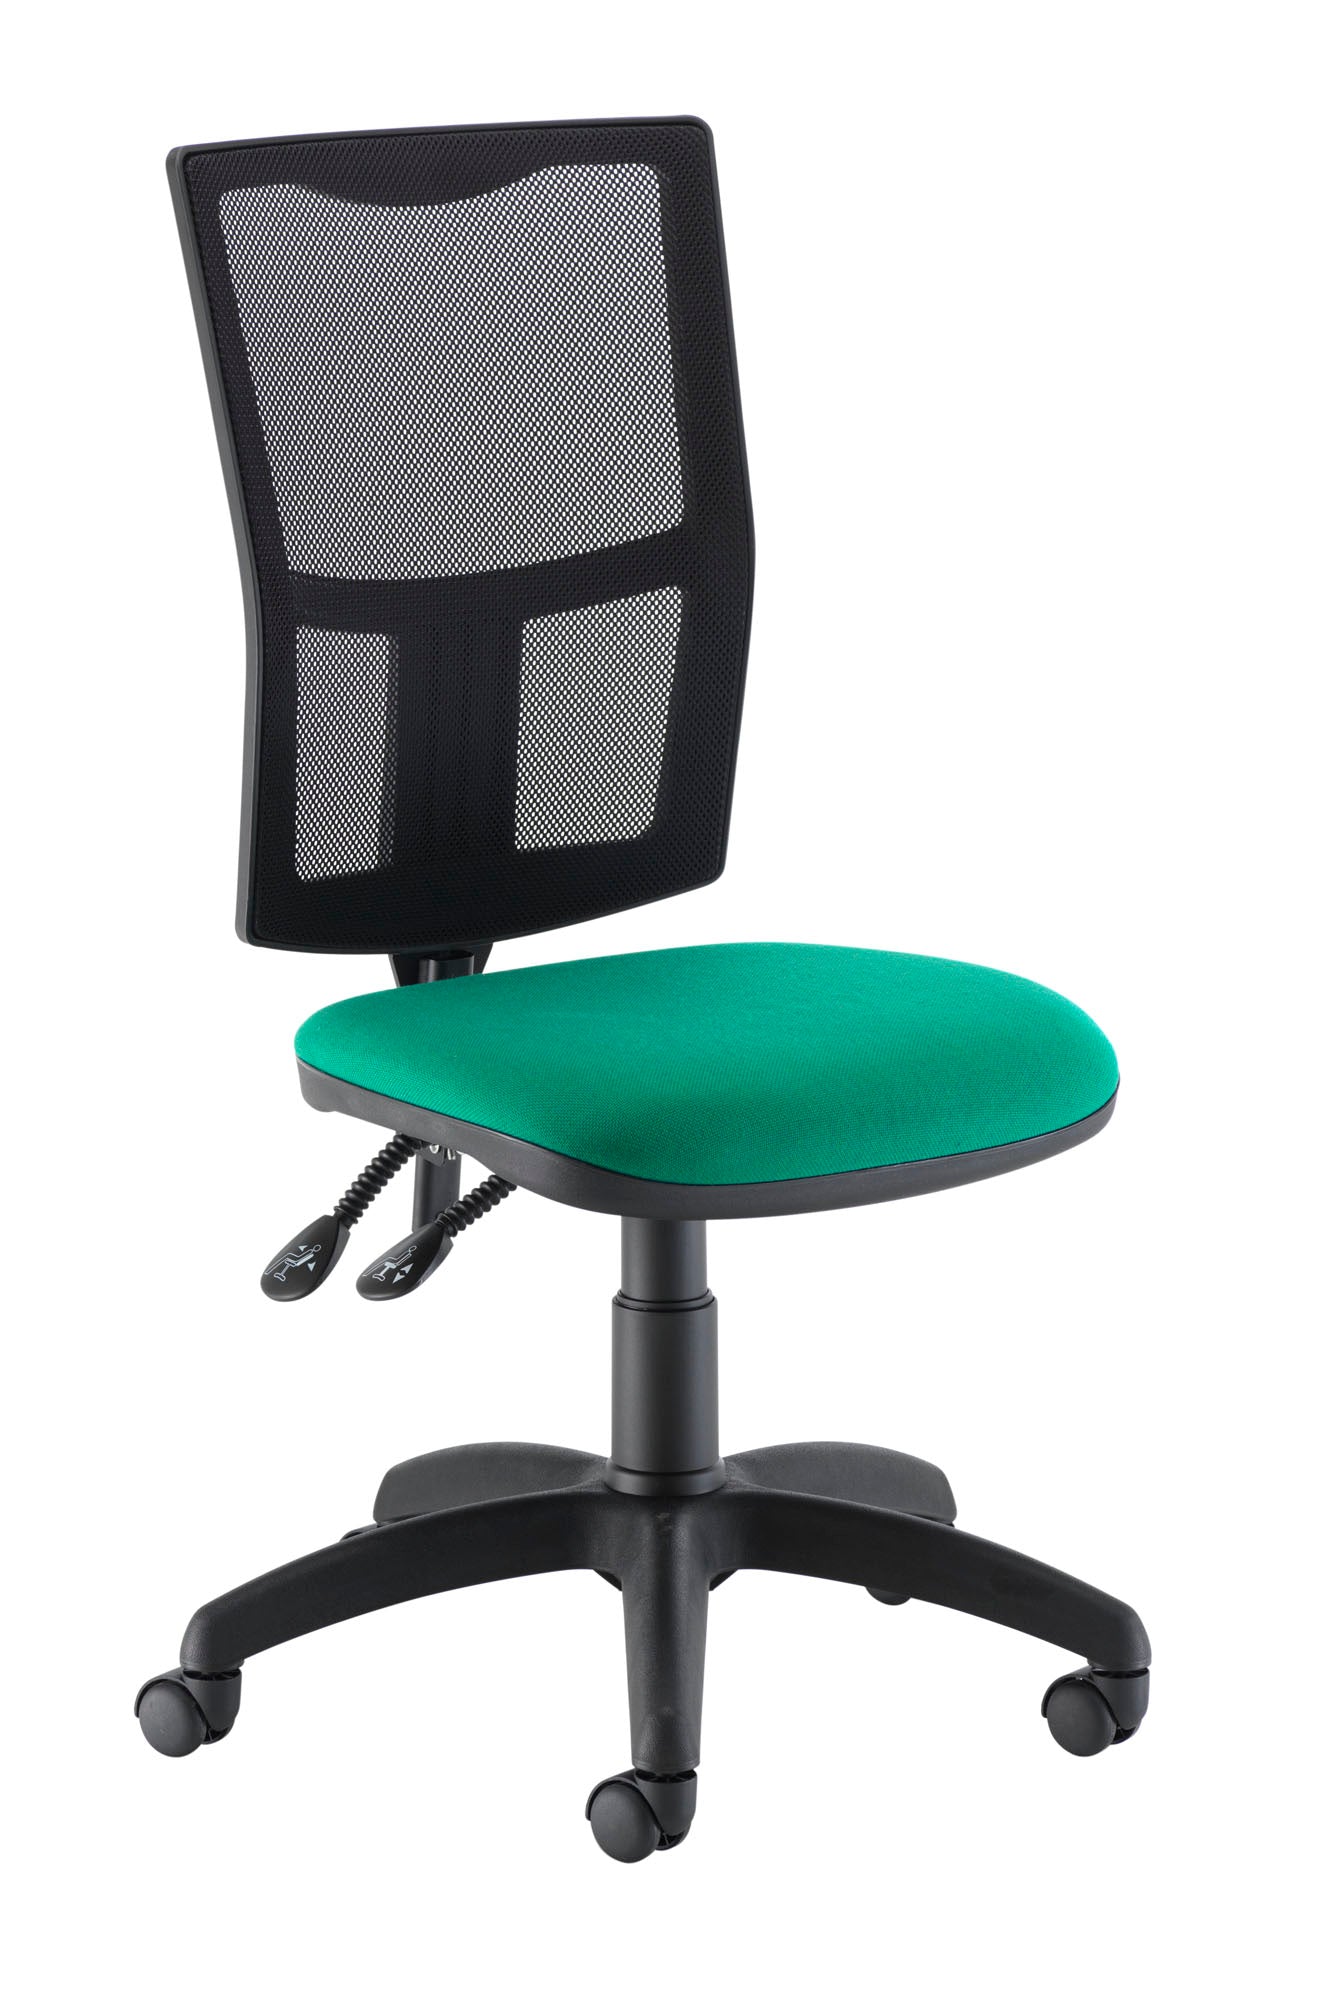 Calypso Armless Mesh Back Office Chair